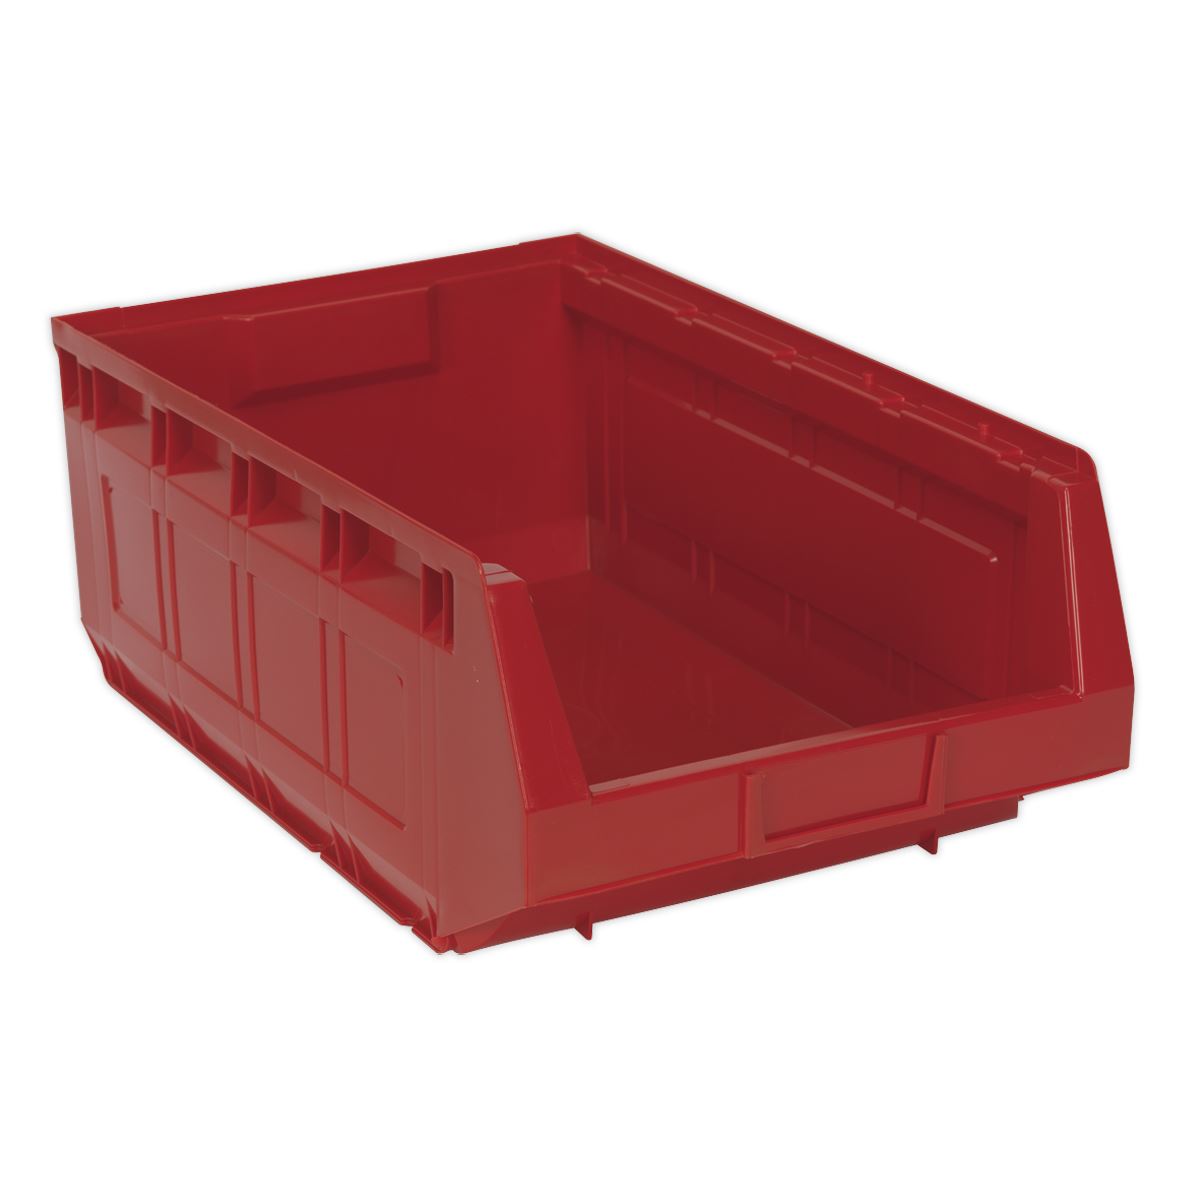 Sealey Plastic Storage Bin 310 x 500 x 190mm - Red Pack of 6